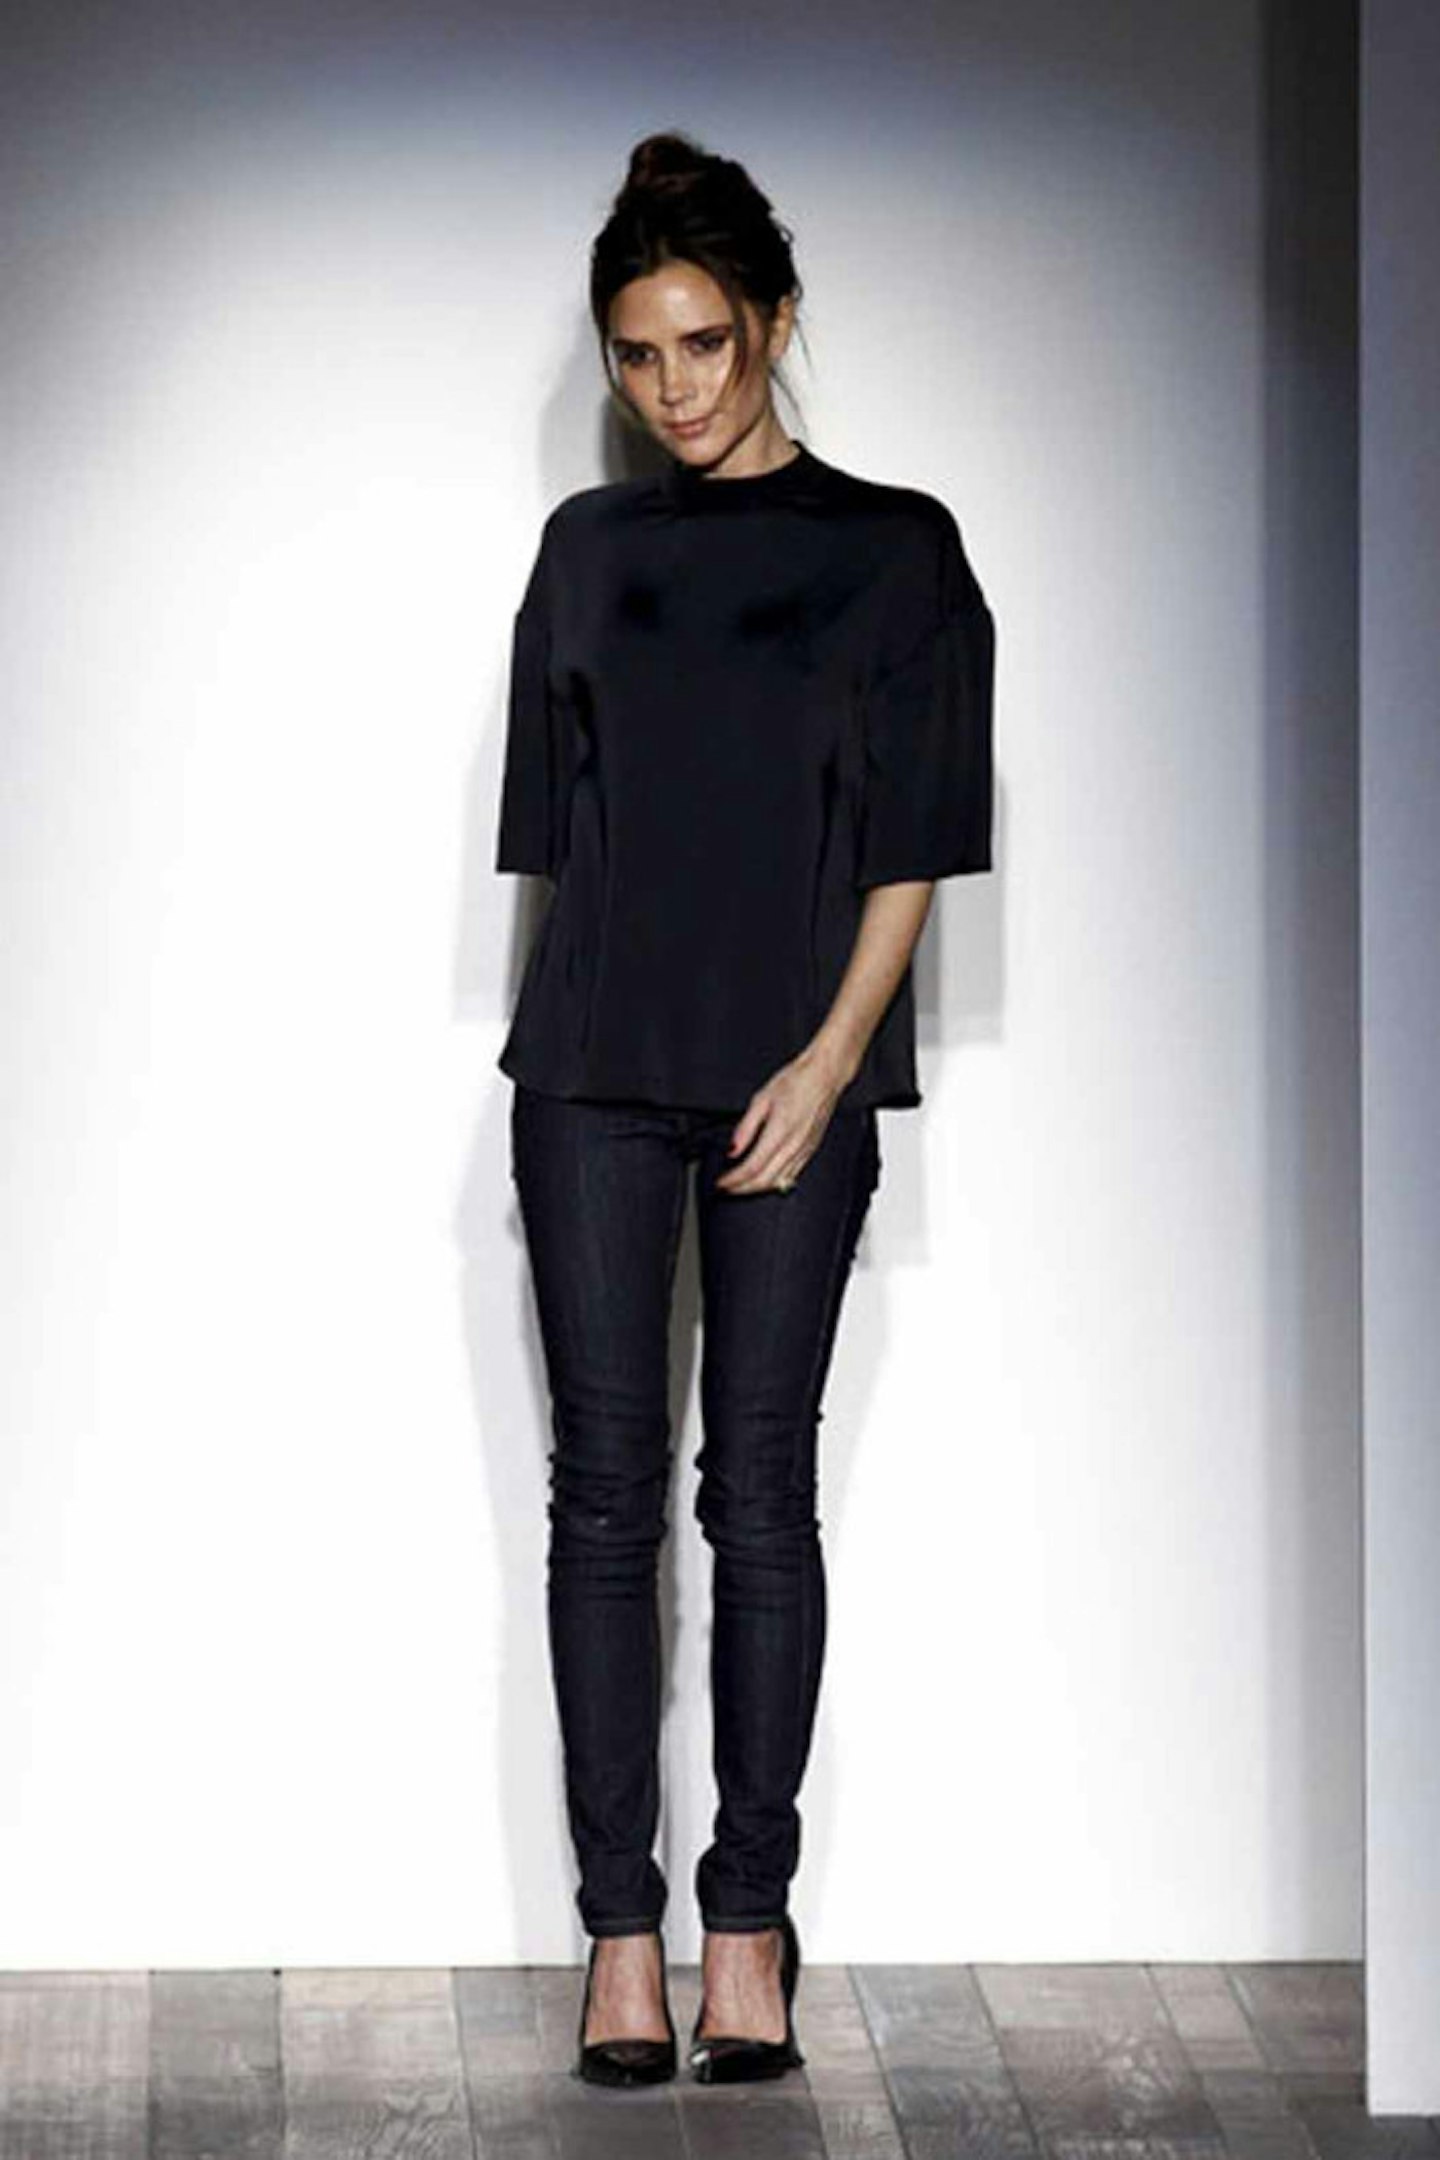 Victoria Beckham style new york fashion skinny jeans autumn 2013